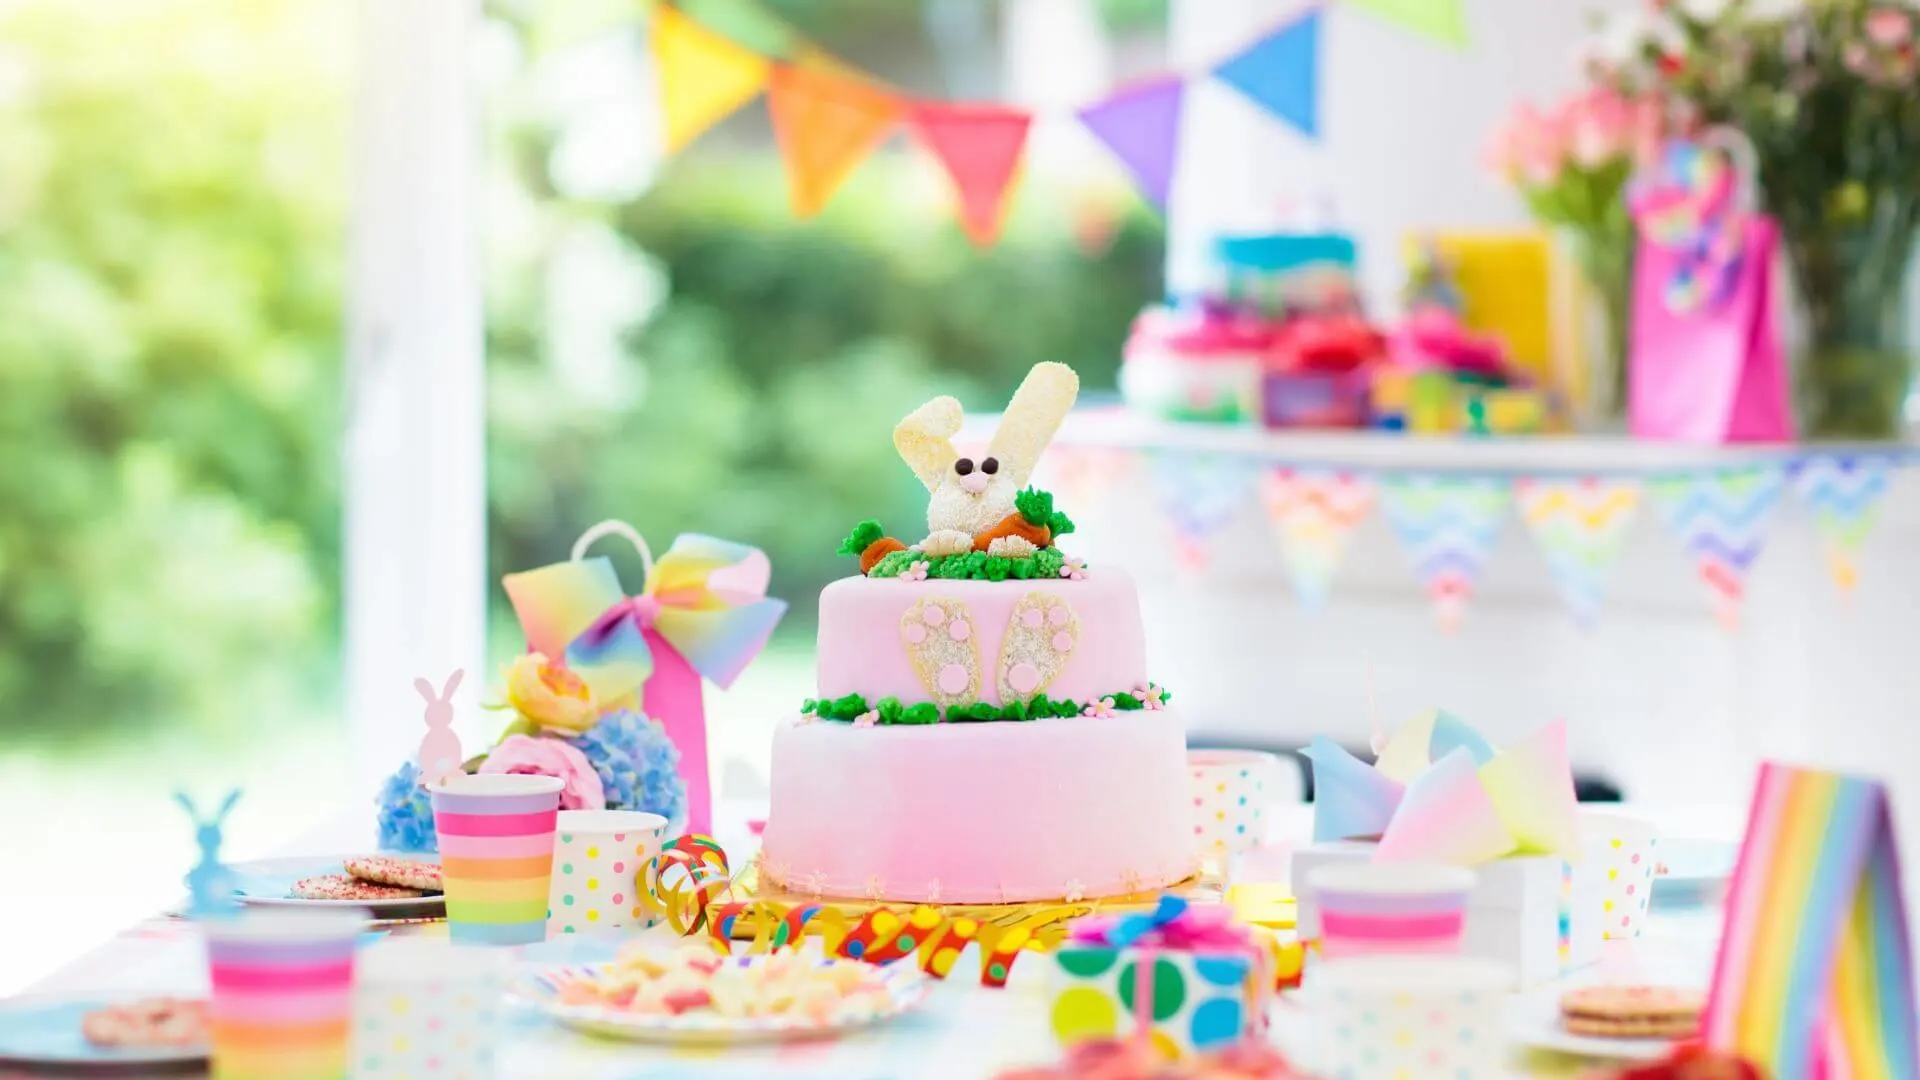 Creating an Unforgettable Birthday Celebration for Your Children